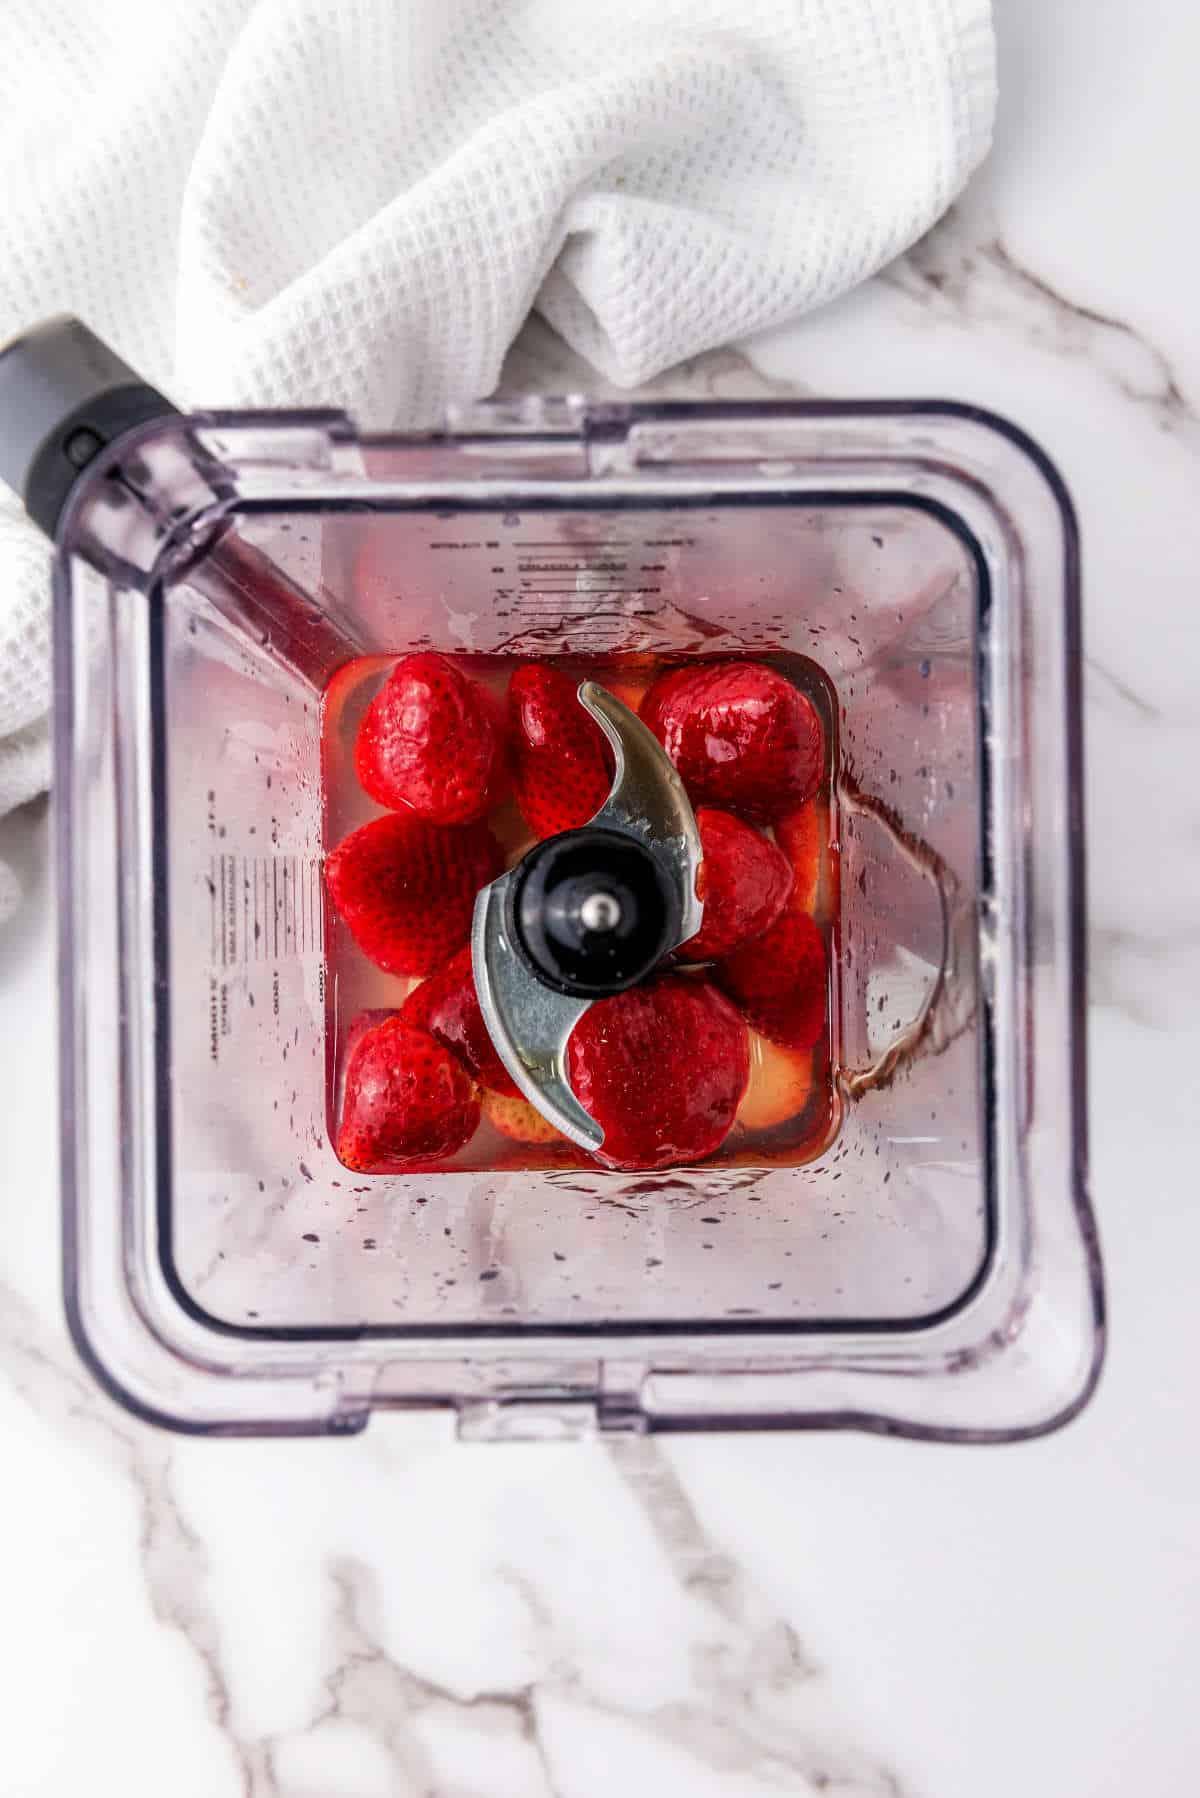 blender with berries inside.